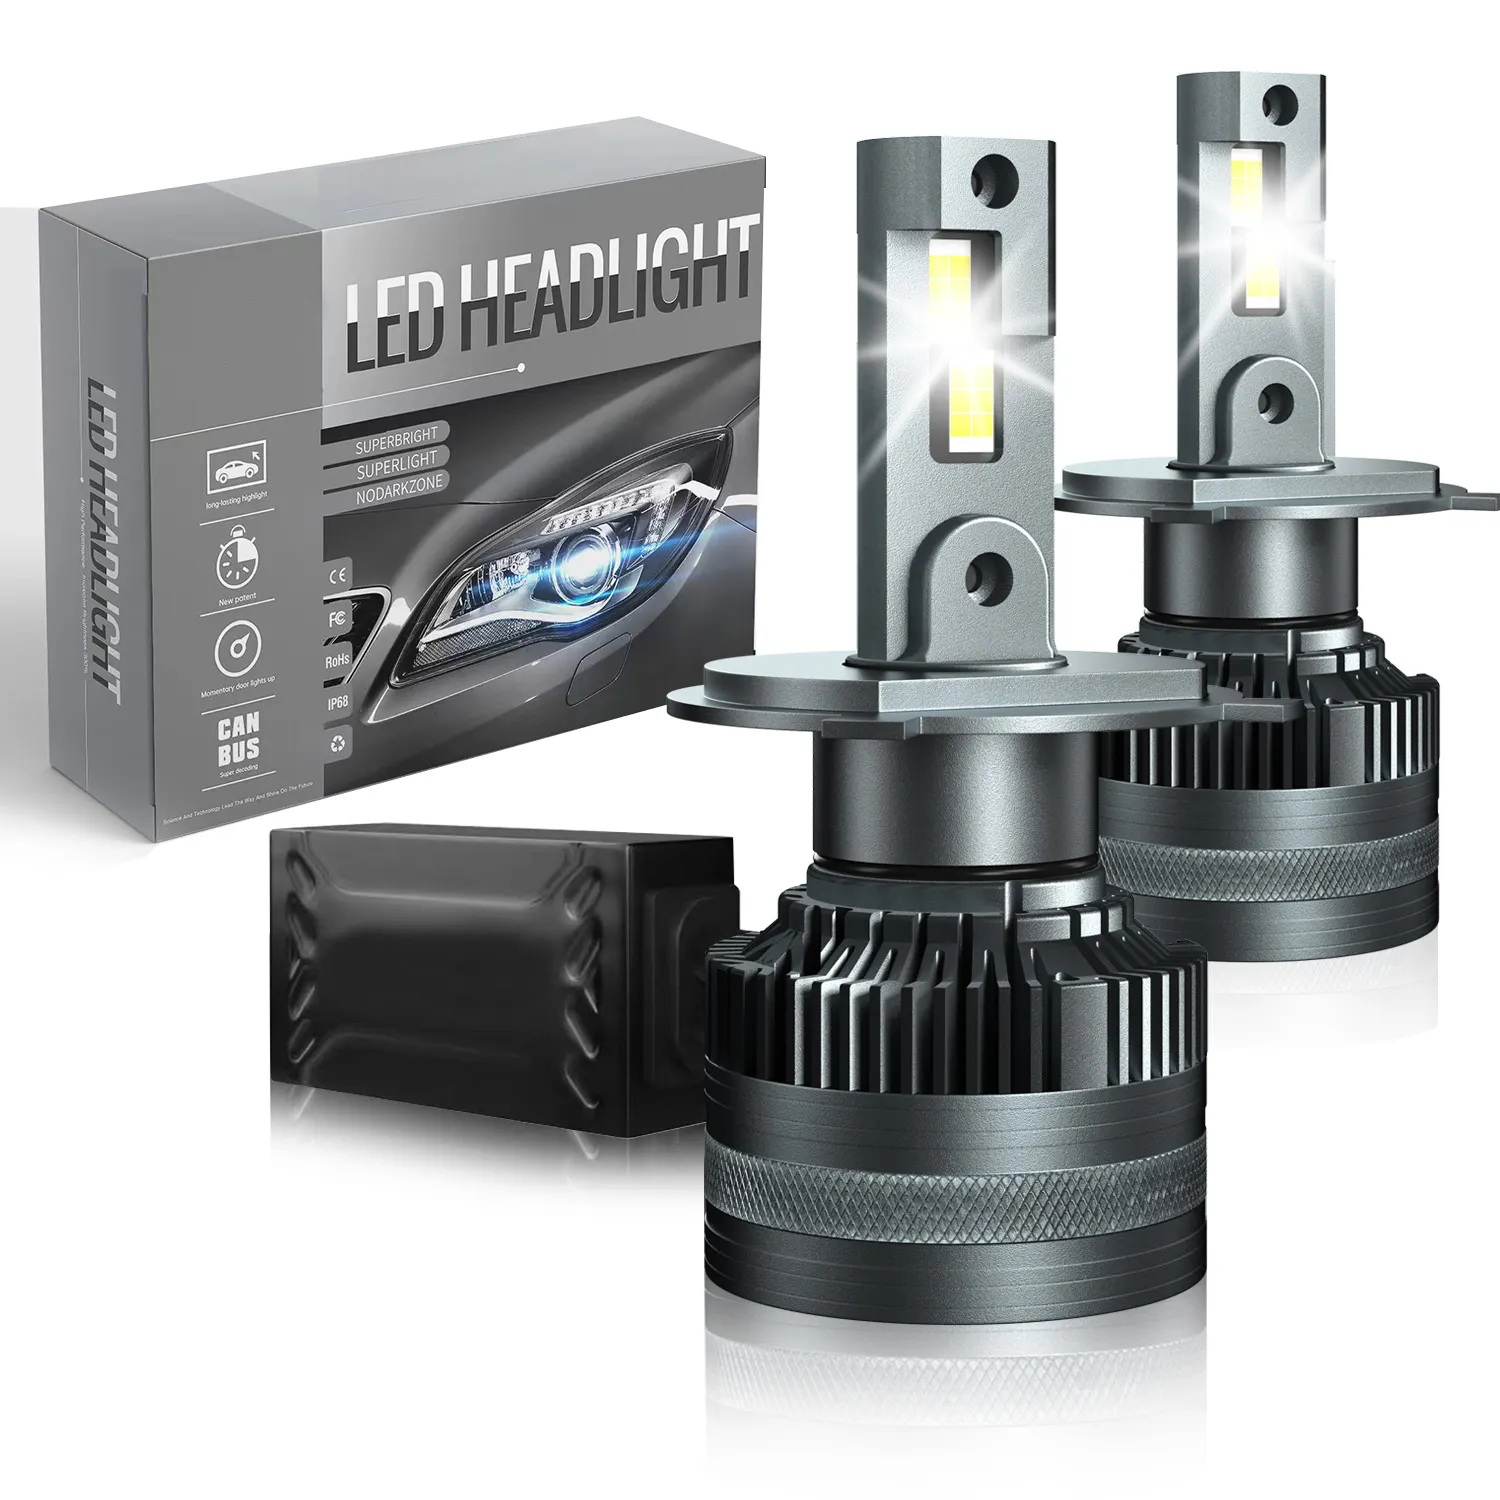 Super Bright Led Headlight Bulb H4 9005 H7 60W 6500K 12v Car Headlight Camry COROLLA Universal Power